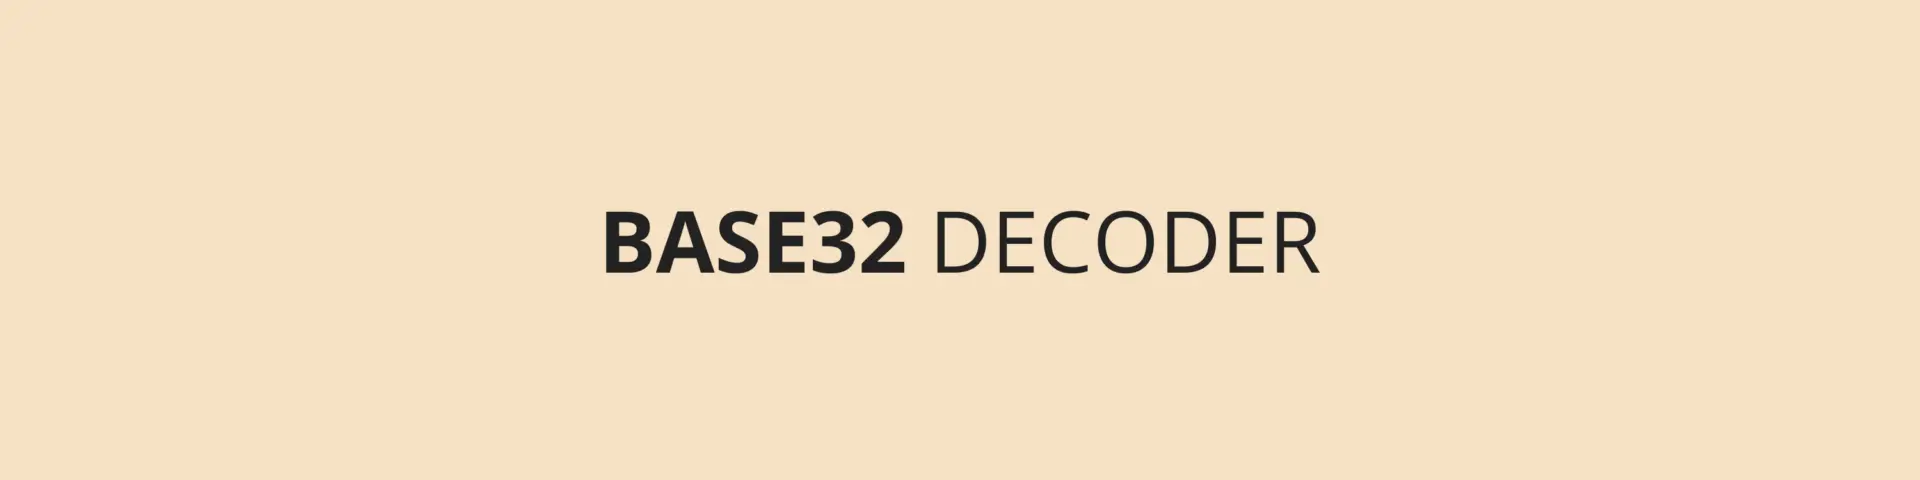 Online Base32 Decoder: Decode Base32 Text or File